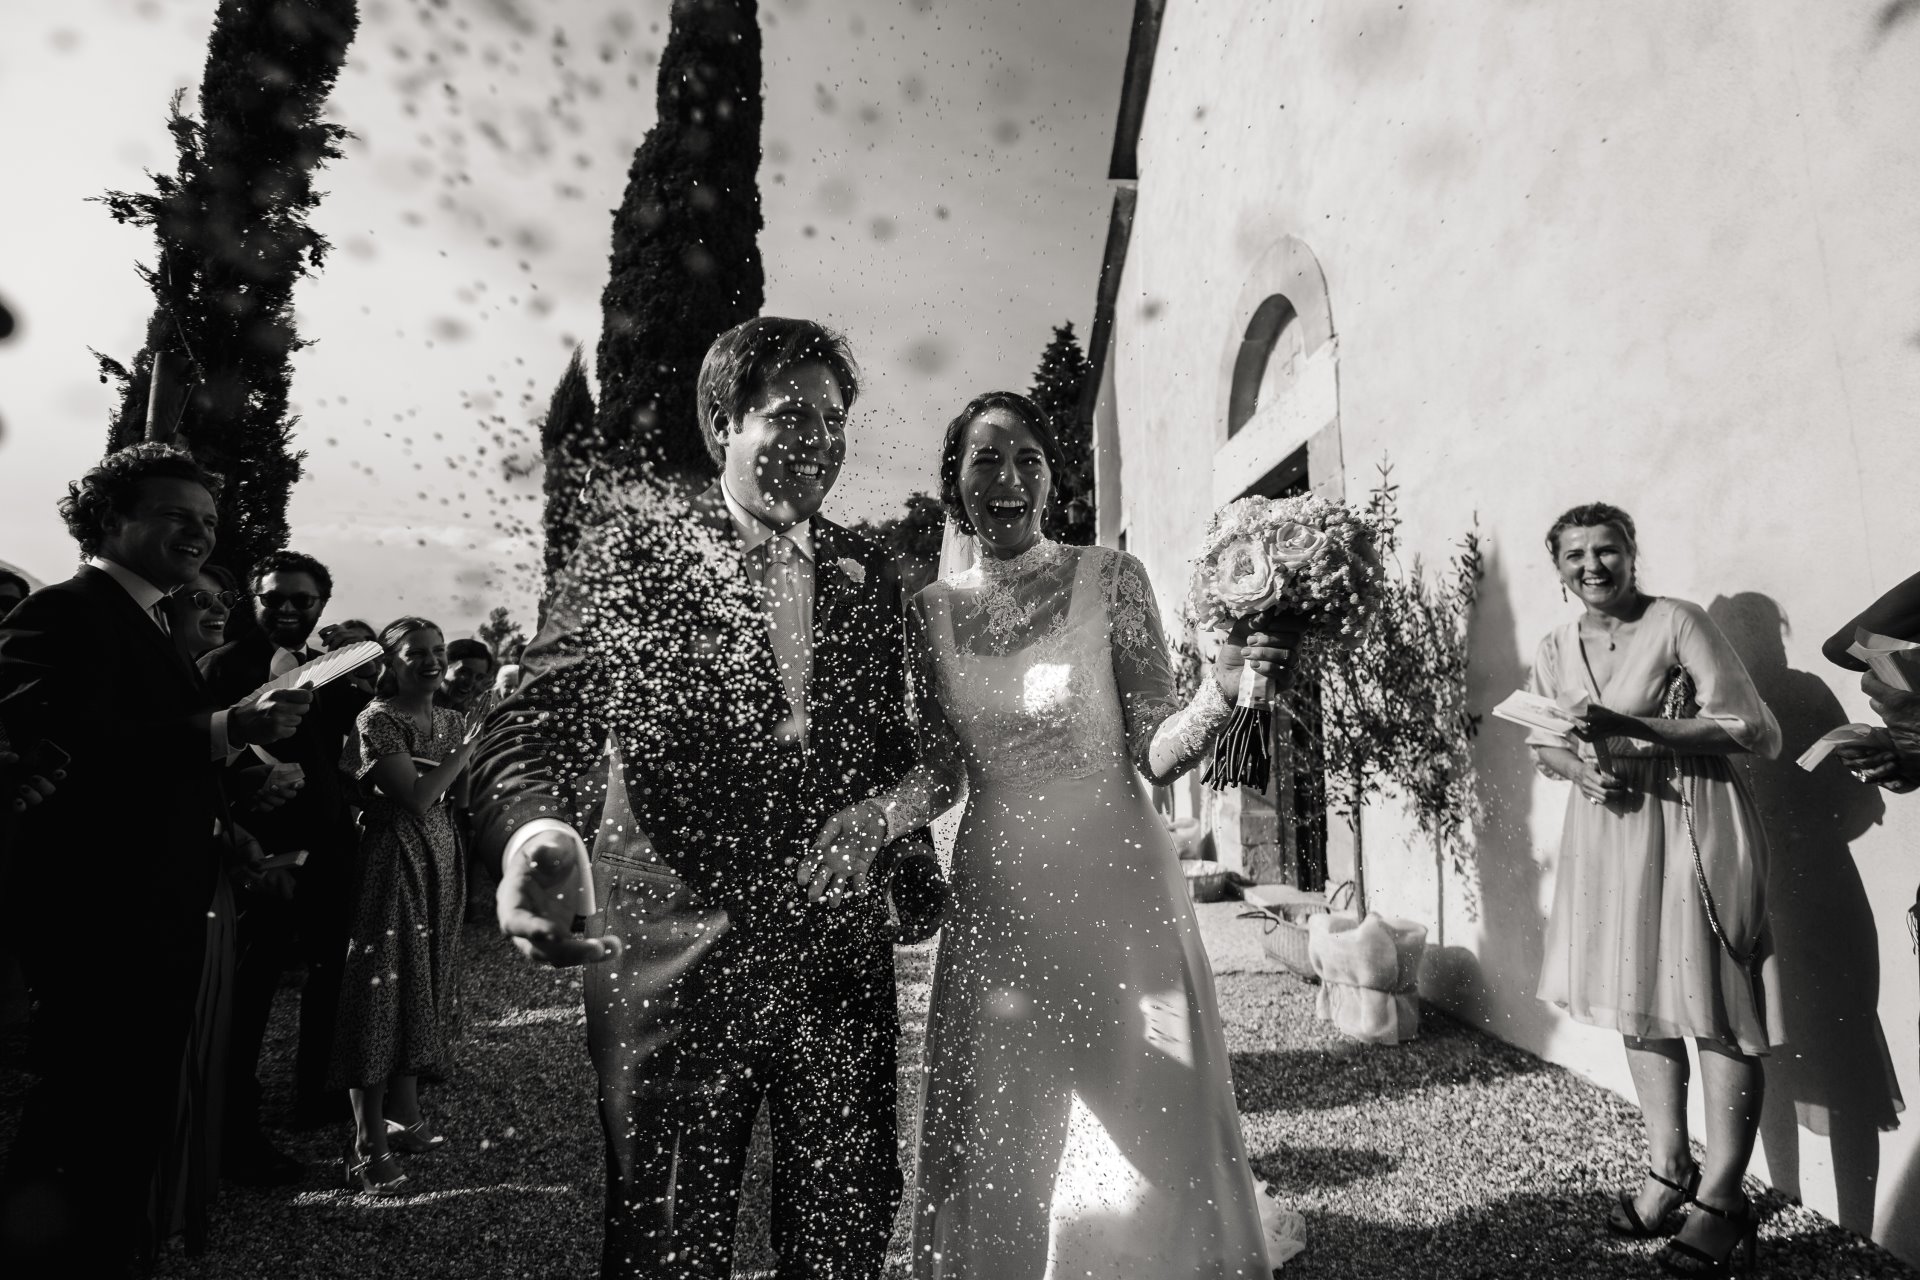 Beat&Edo Italian wedding destination wedding photographer videographer luxury reportage italy amalfi coast tuscany apulia masseria potenti venice